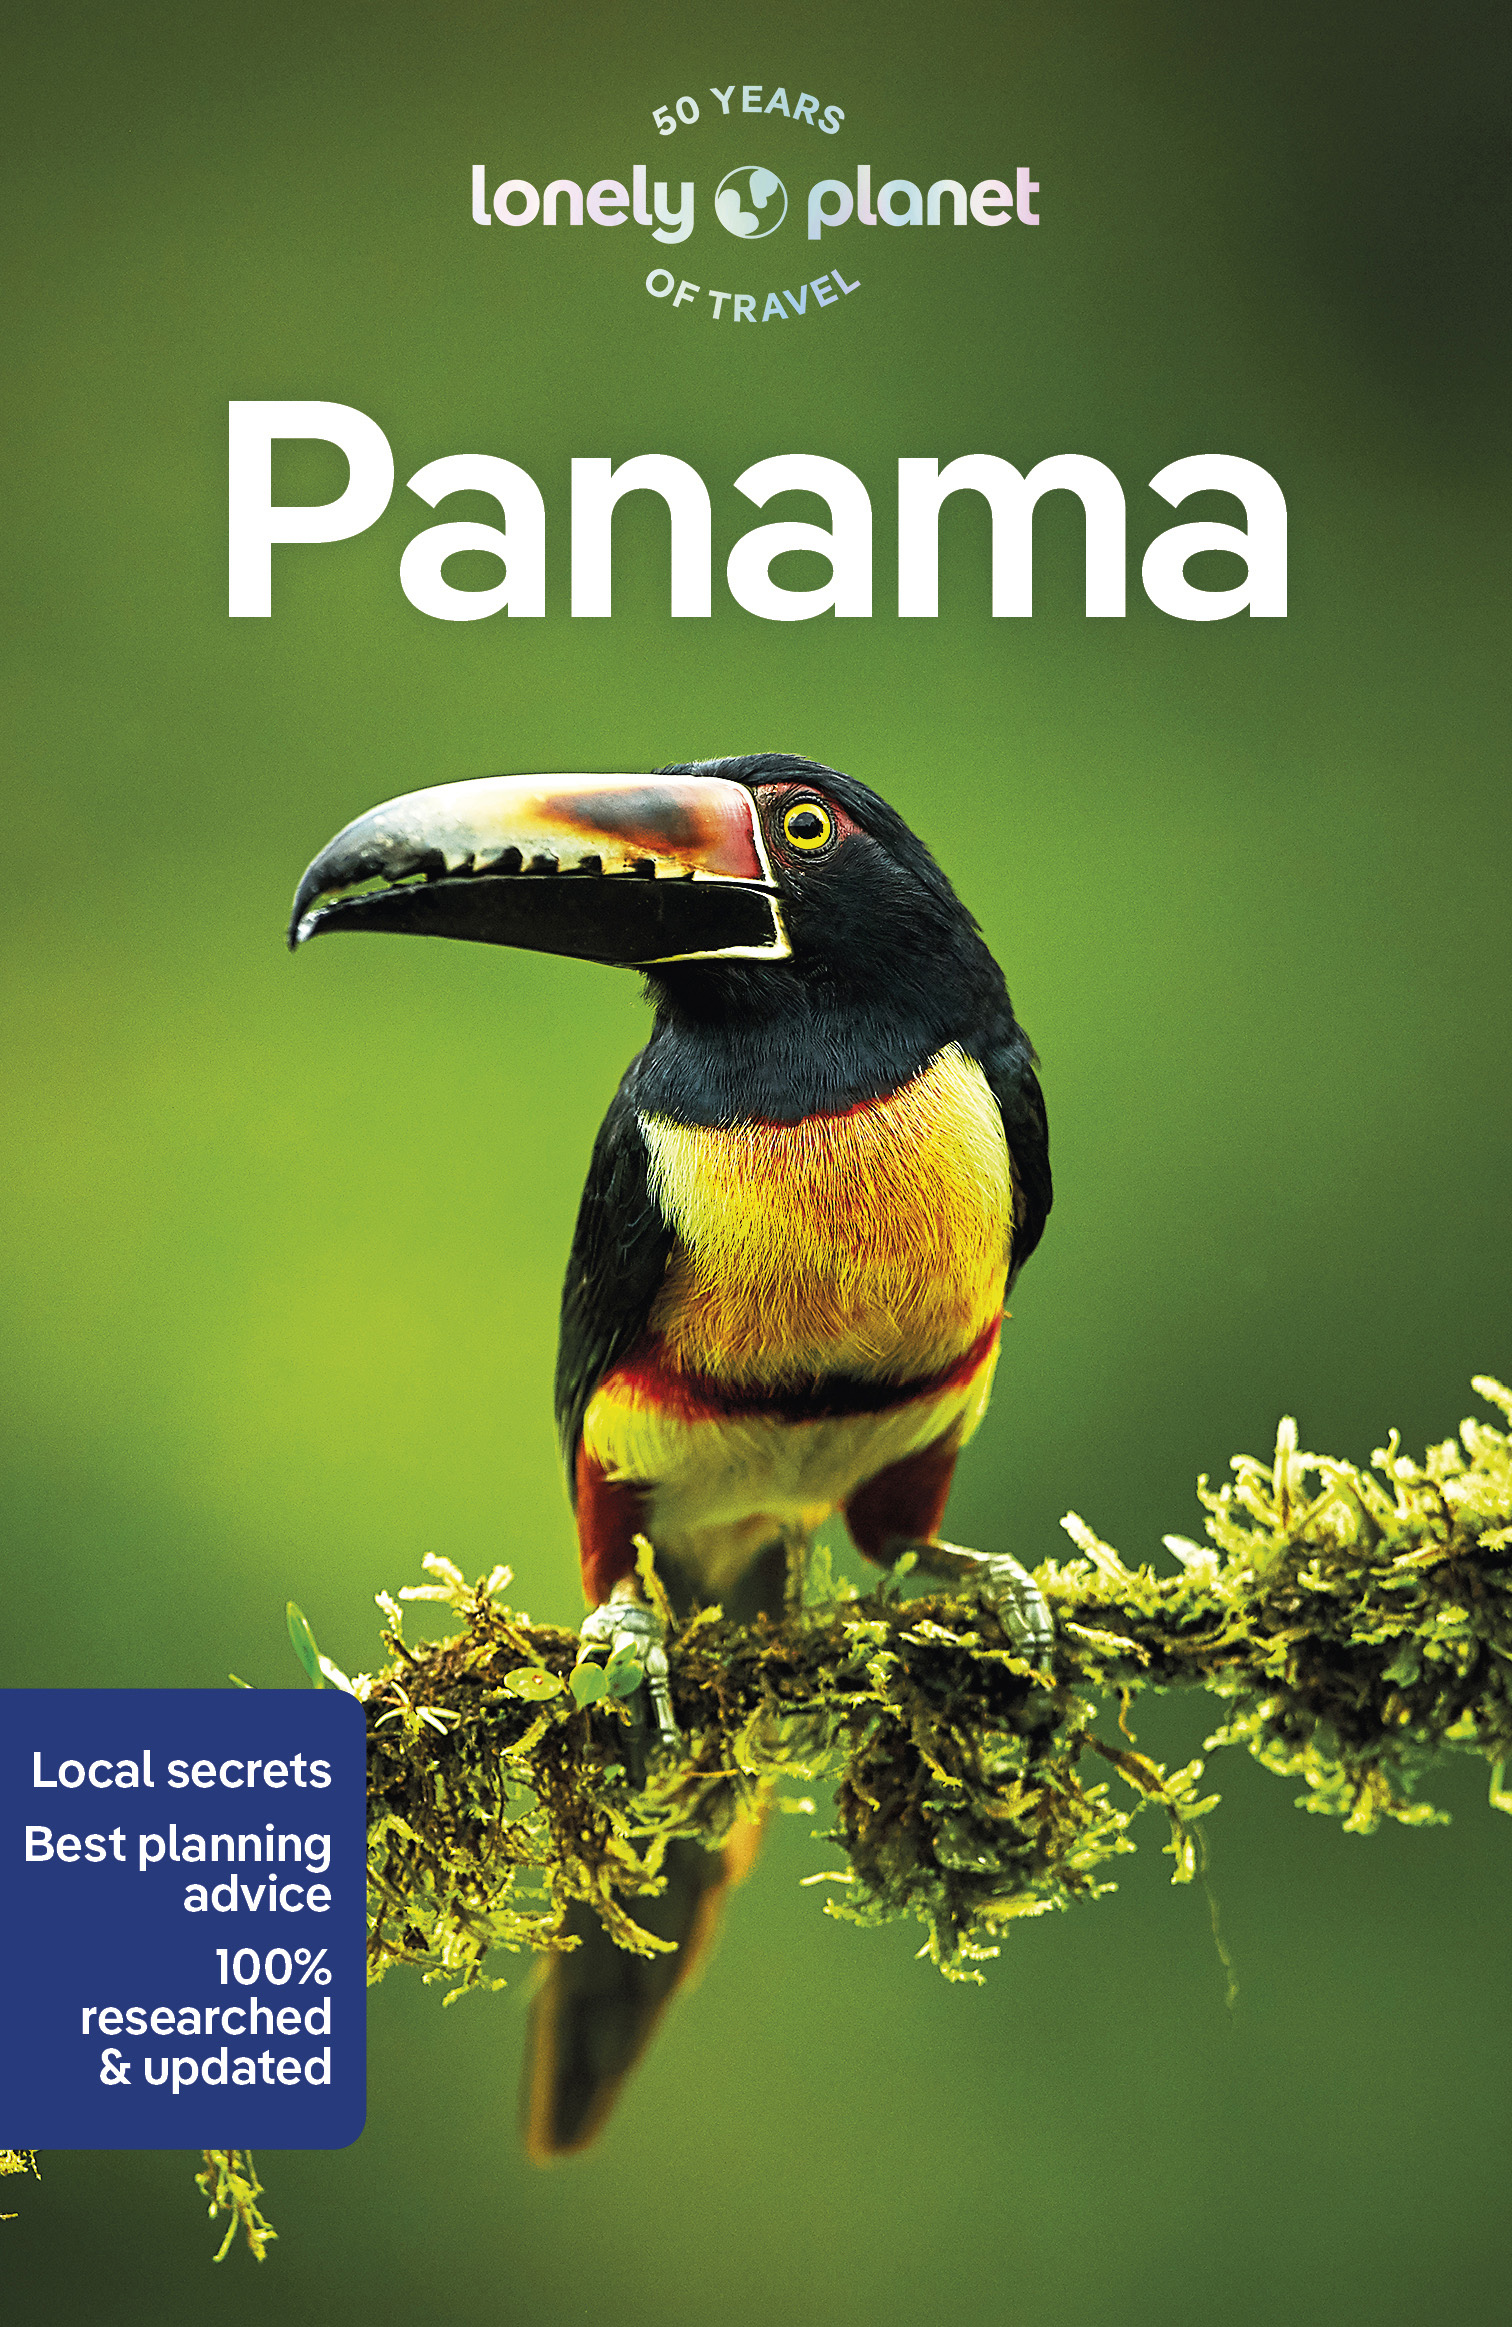 Panama - turistický průvodce